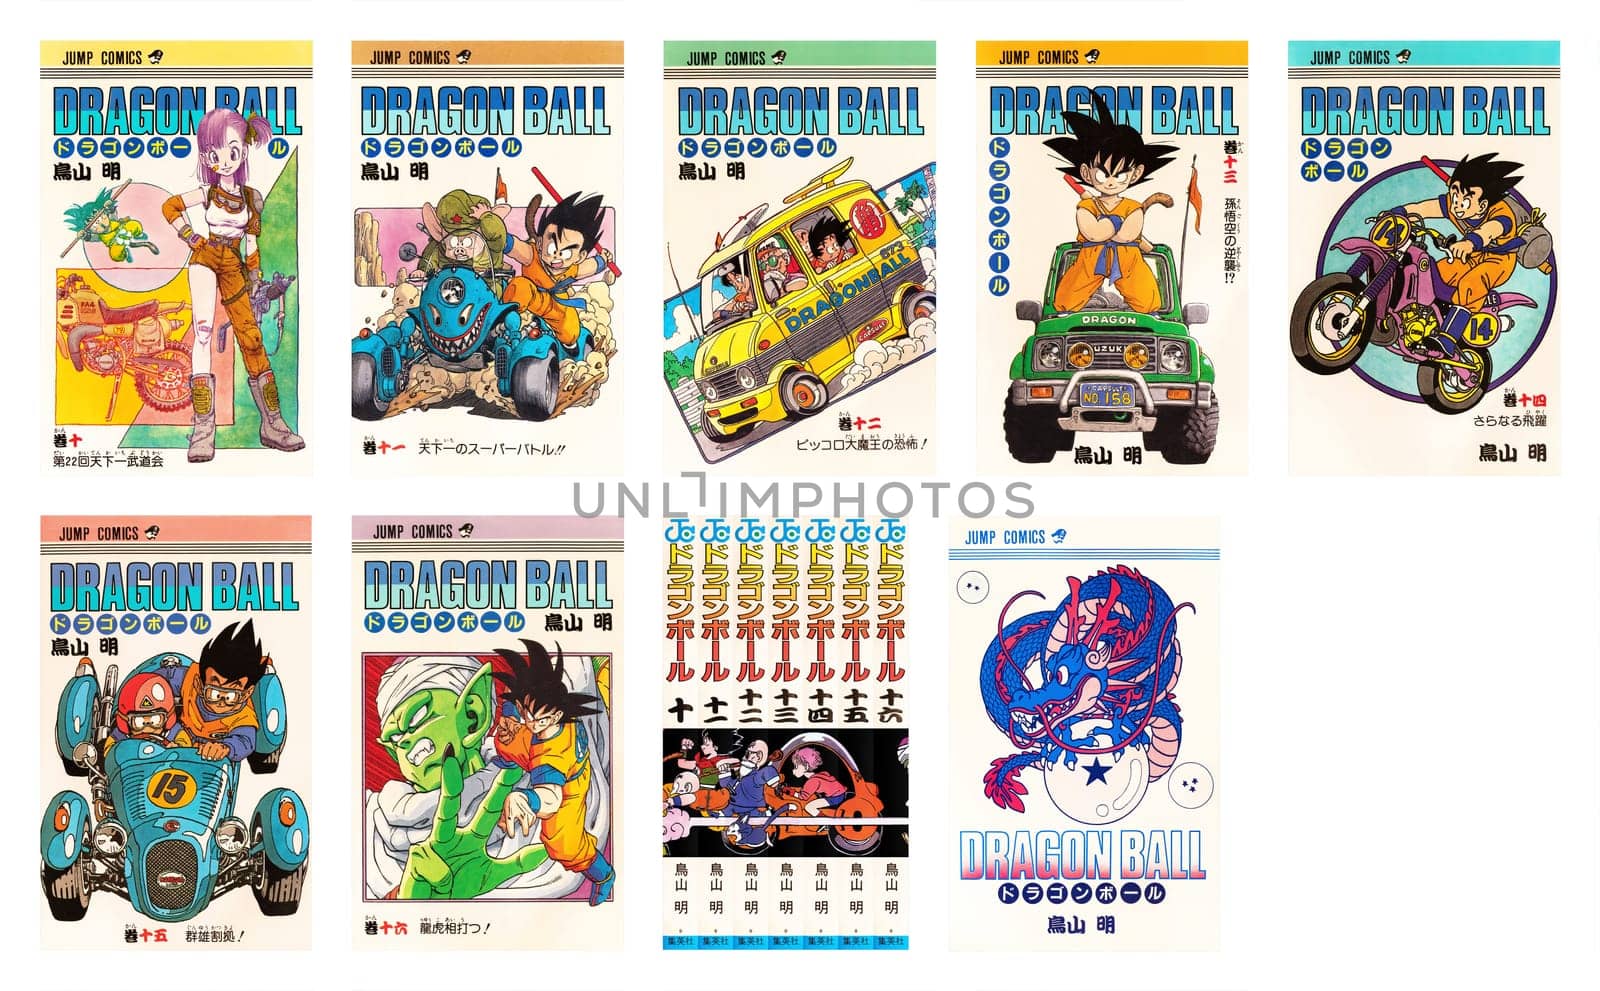 (set 3/7) Covers 10 to 16 of the Japanese manga Dragon Ball featuring the Piccolo saga. by kuremo